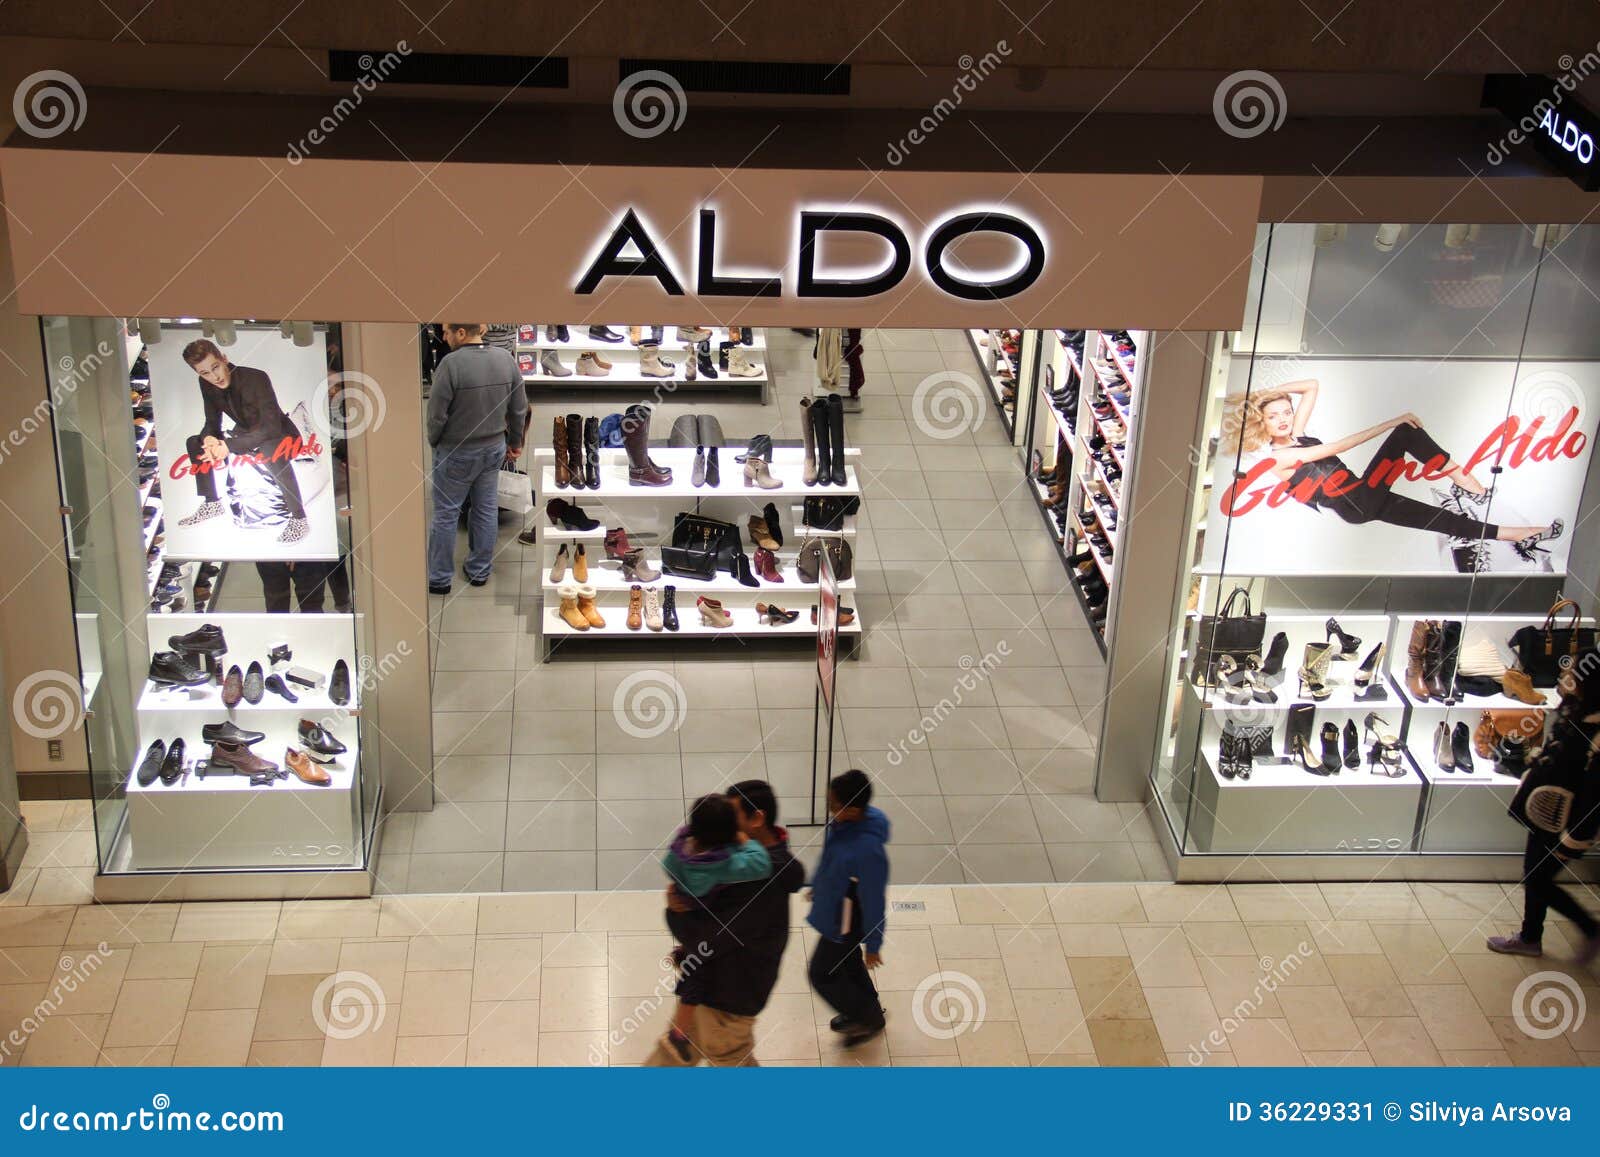 aldo shoe store